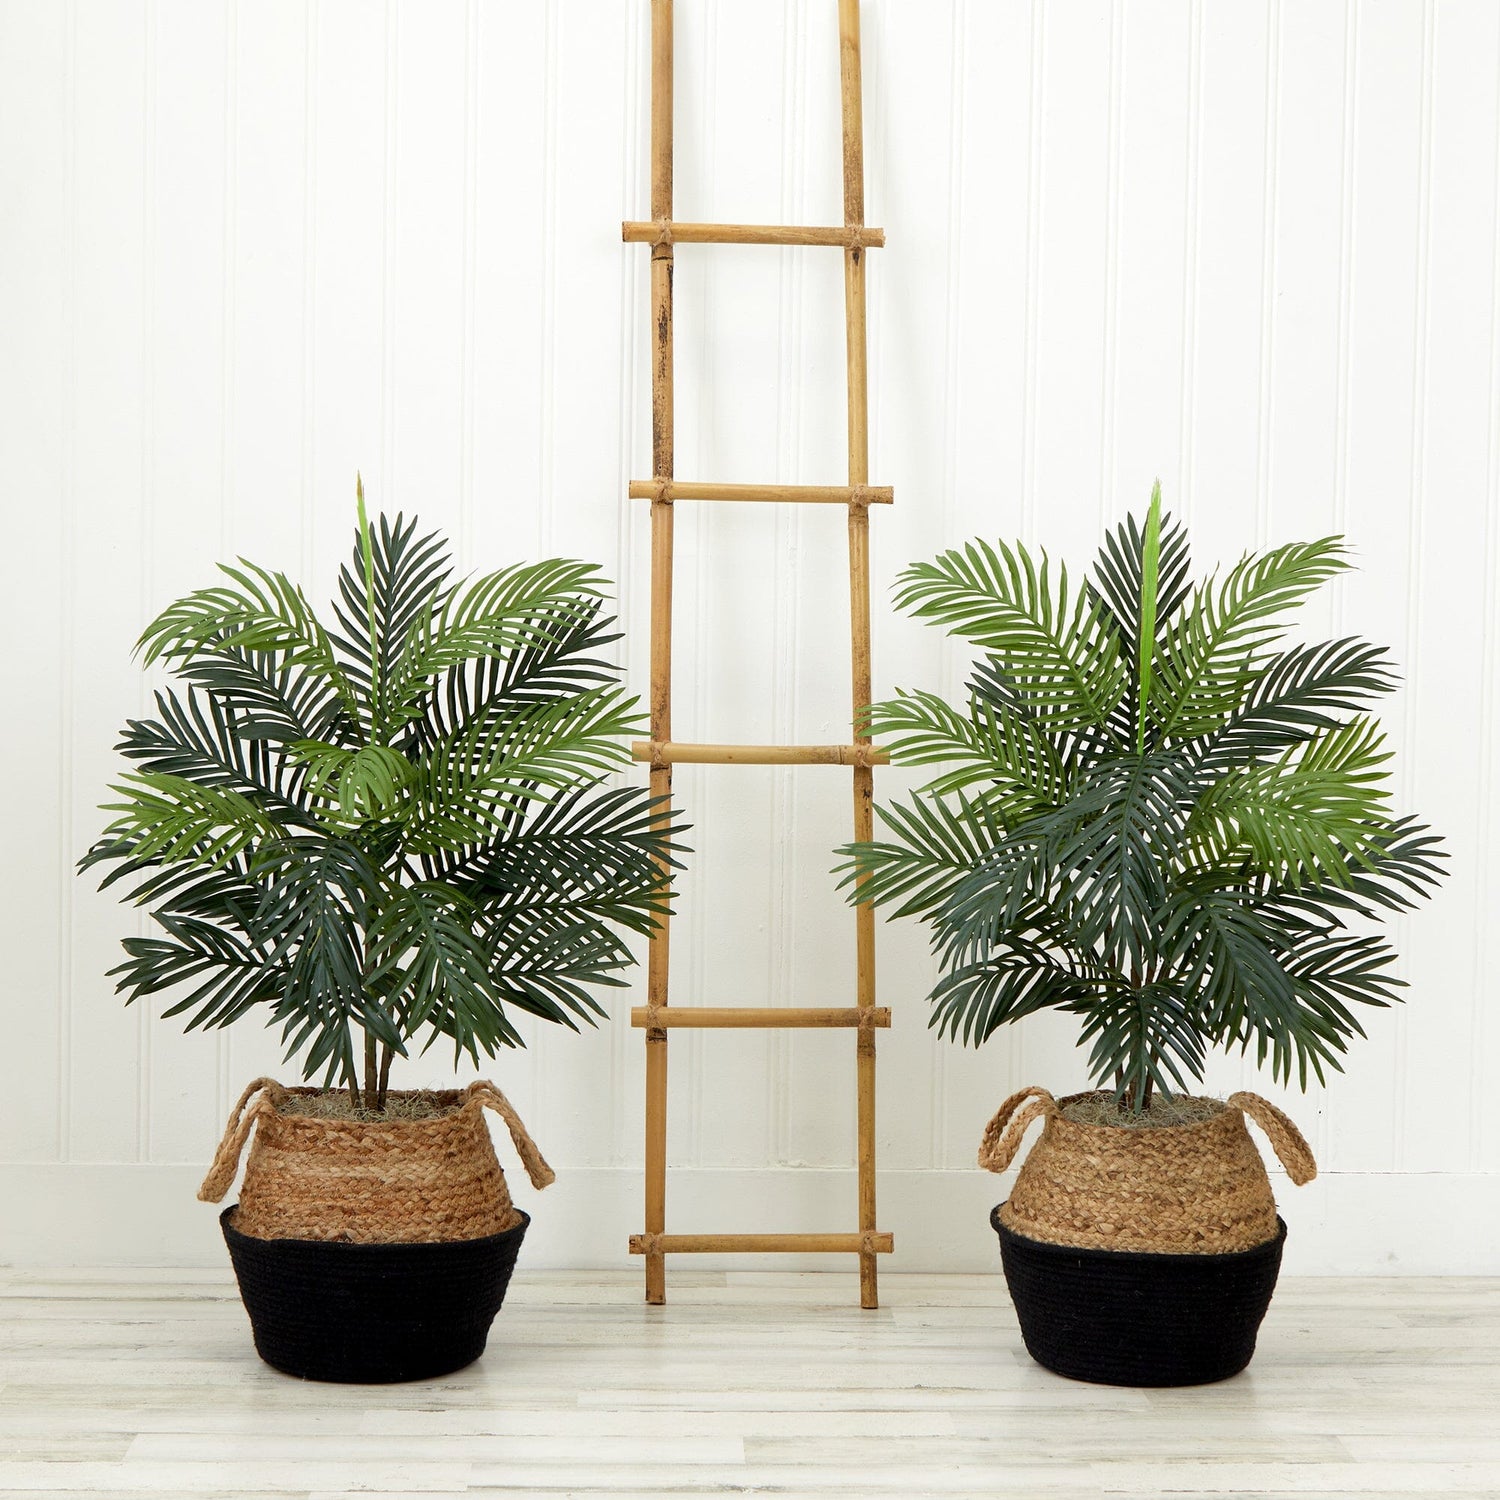 3' Artificial Areca Palm Tree with Handmade Jute & Cotton Basket DIY KIT - Set of 2